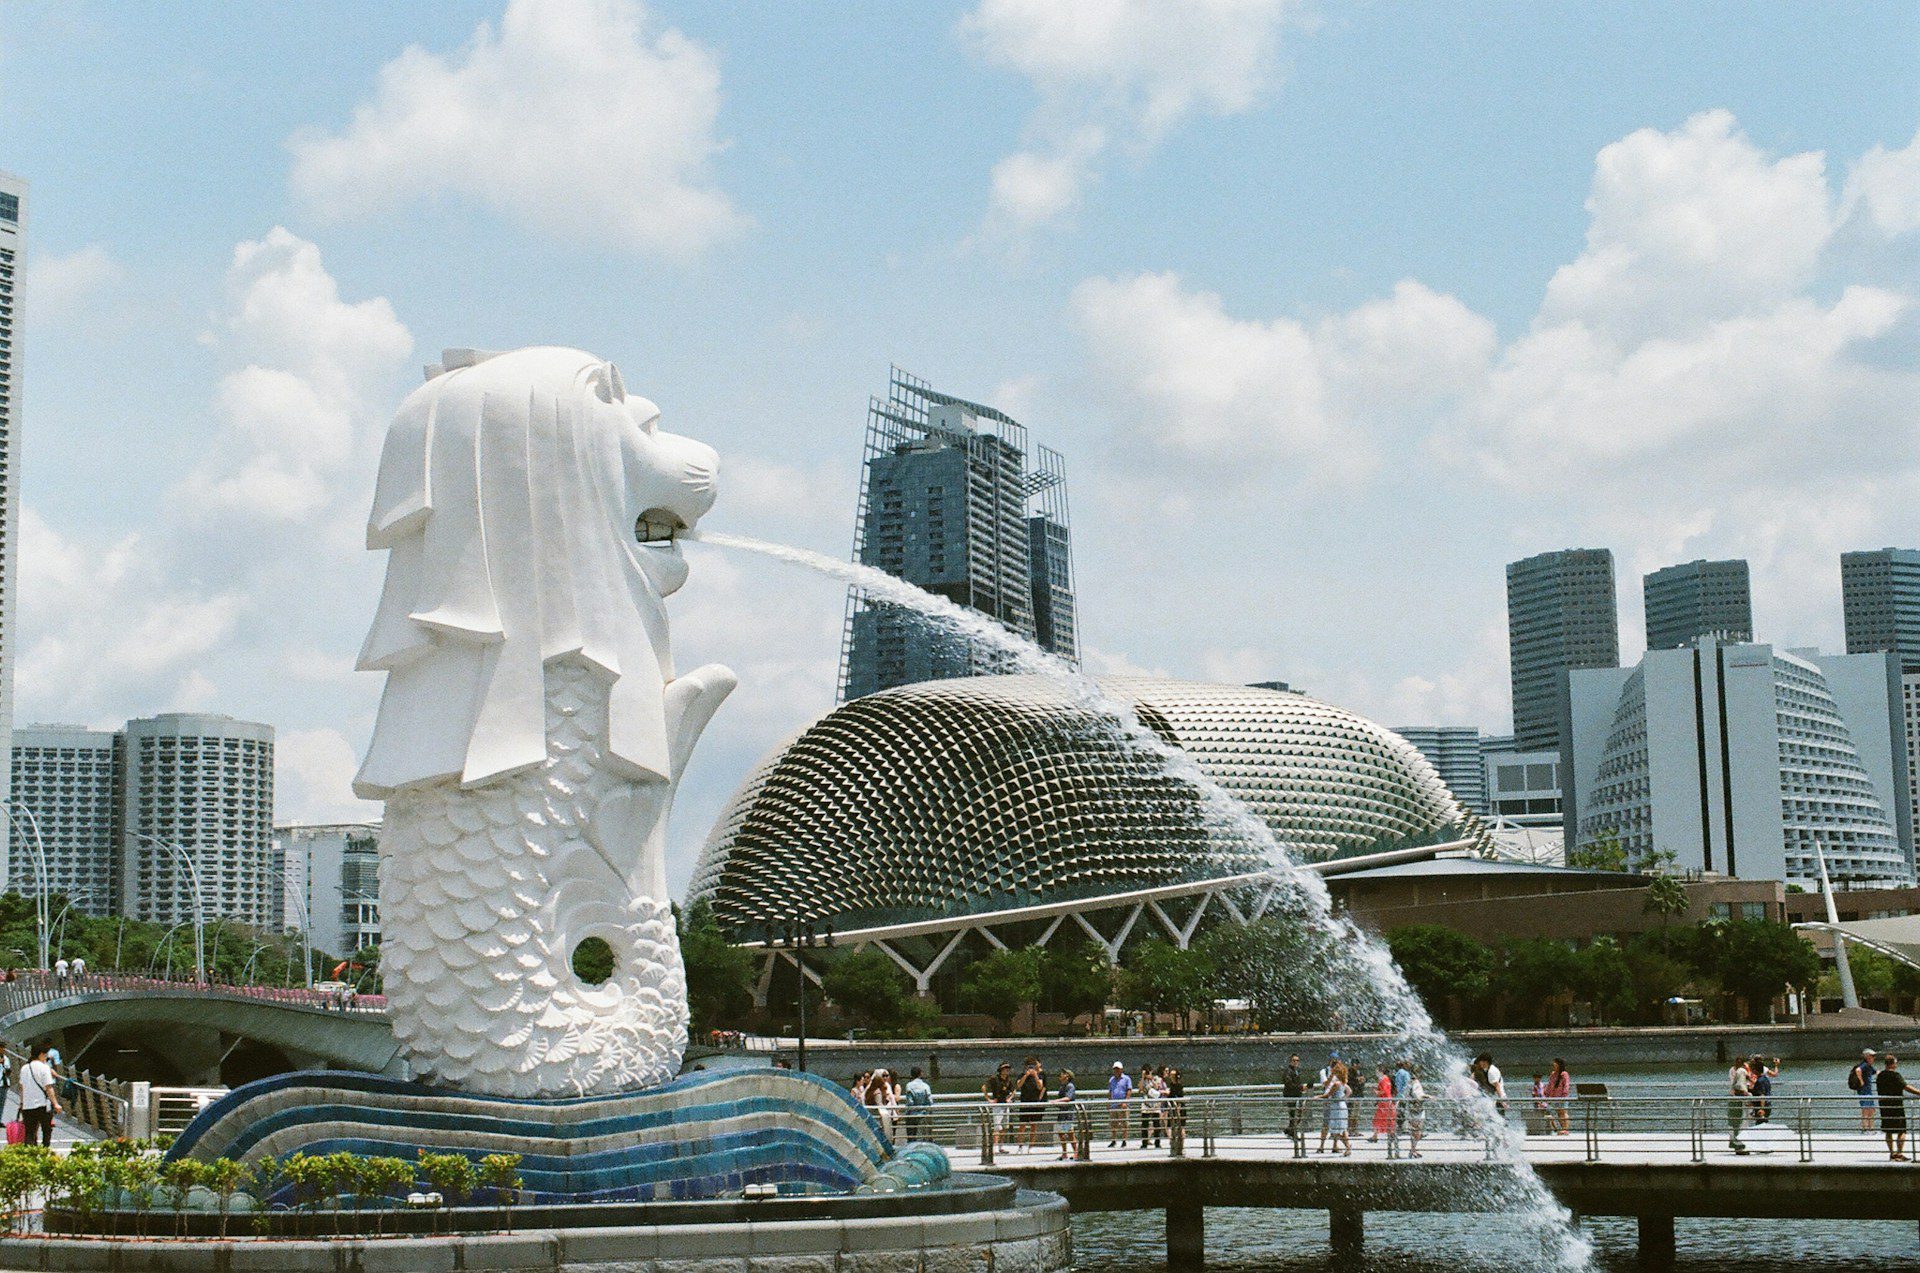 expand to singapore singapore statutory updates